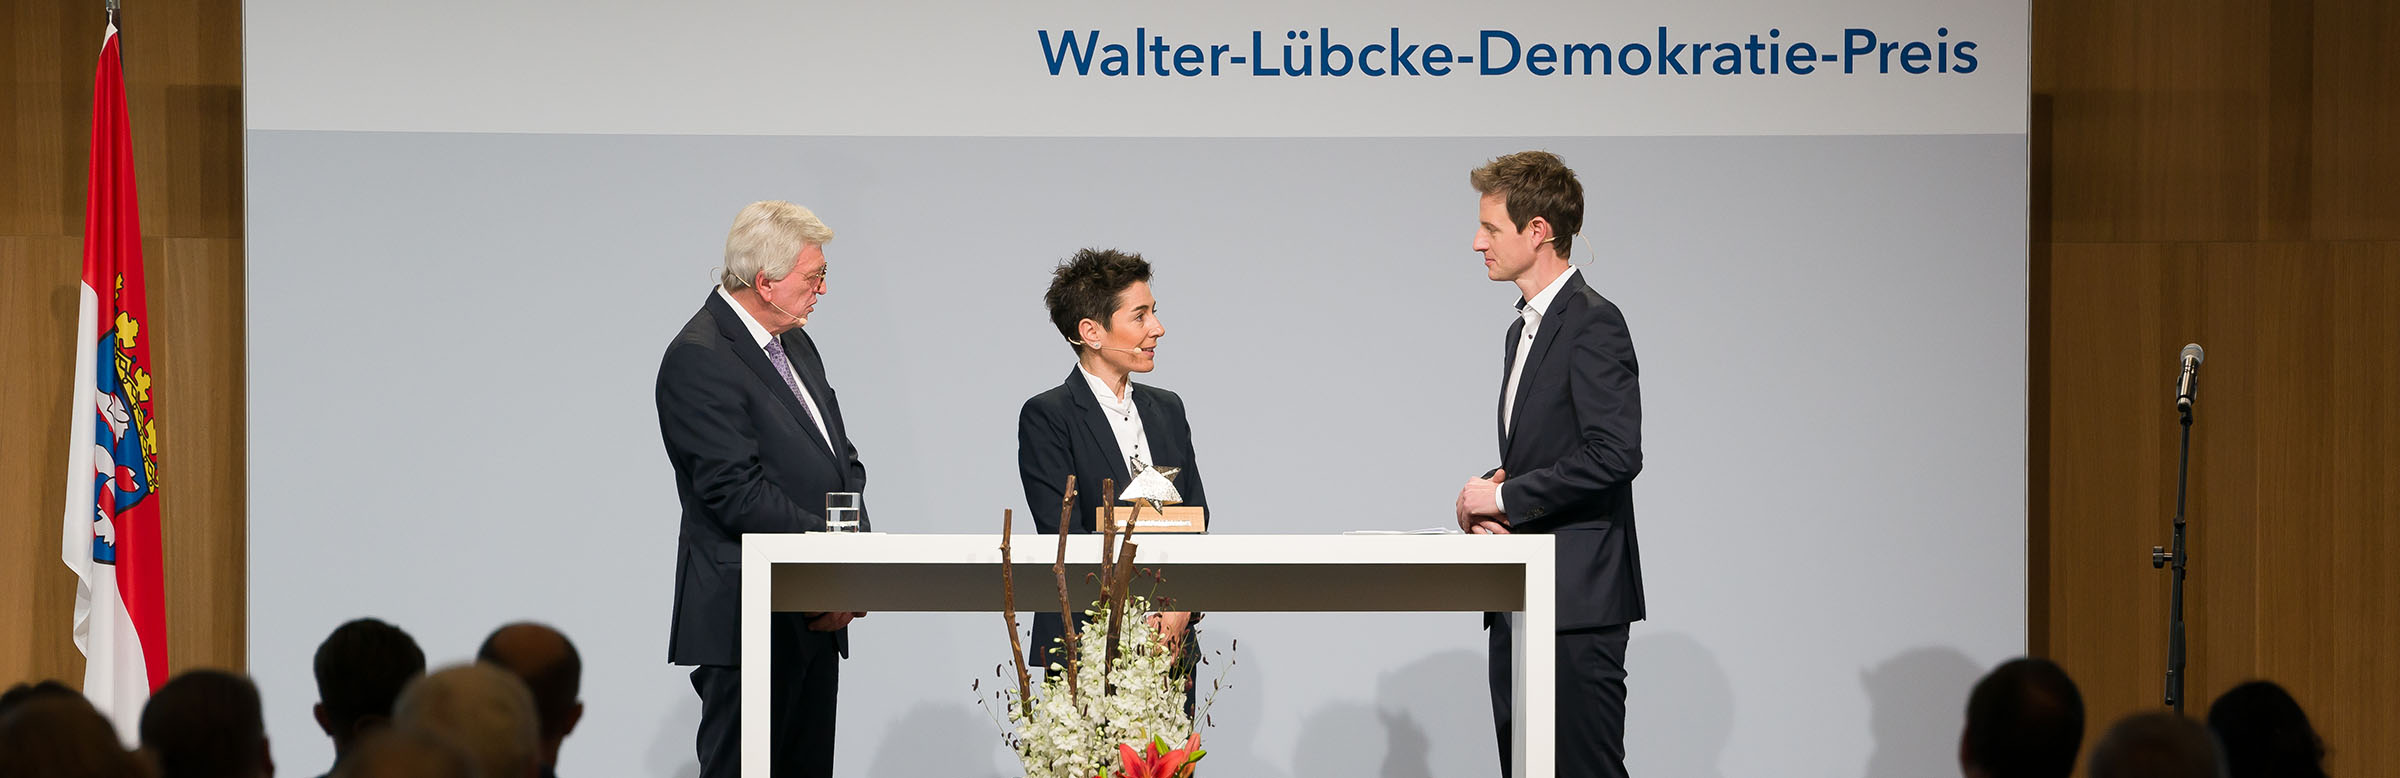 Walter-Luebcke-Demokratie-Preis